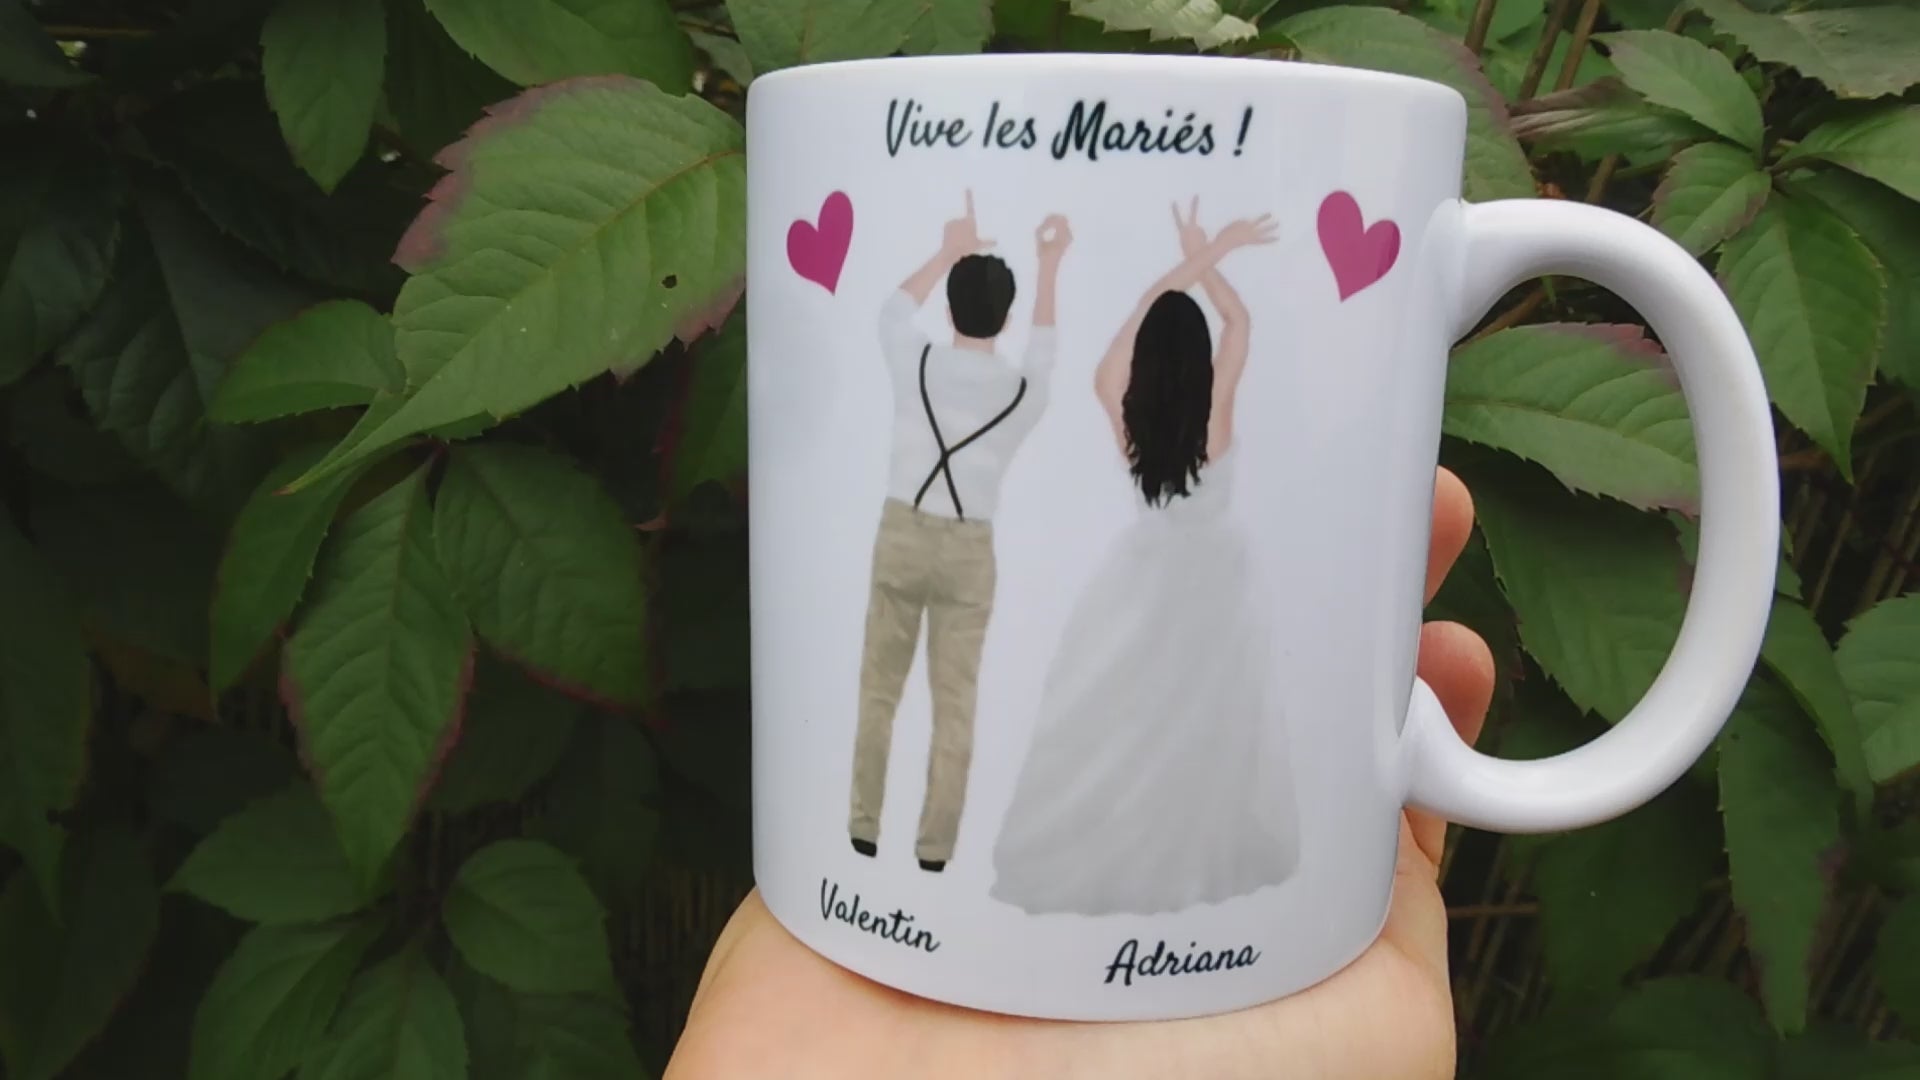 Personalized Couple Mug, Newlywed Gift